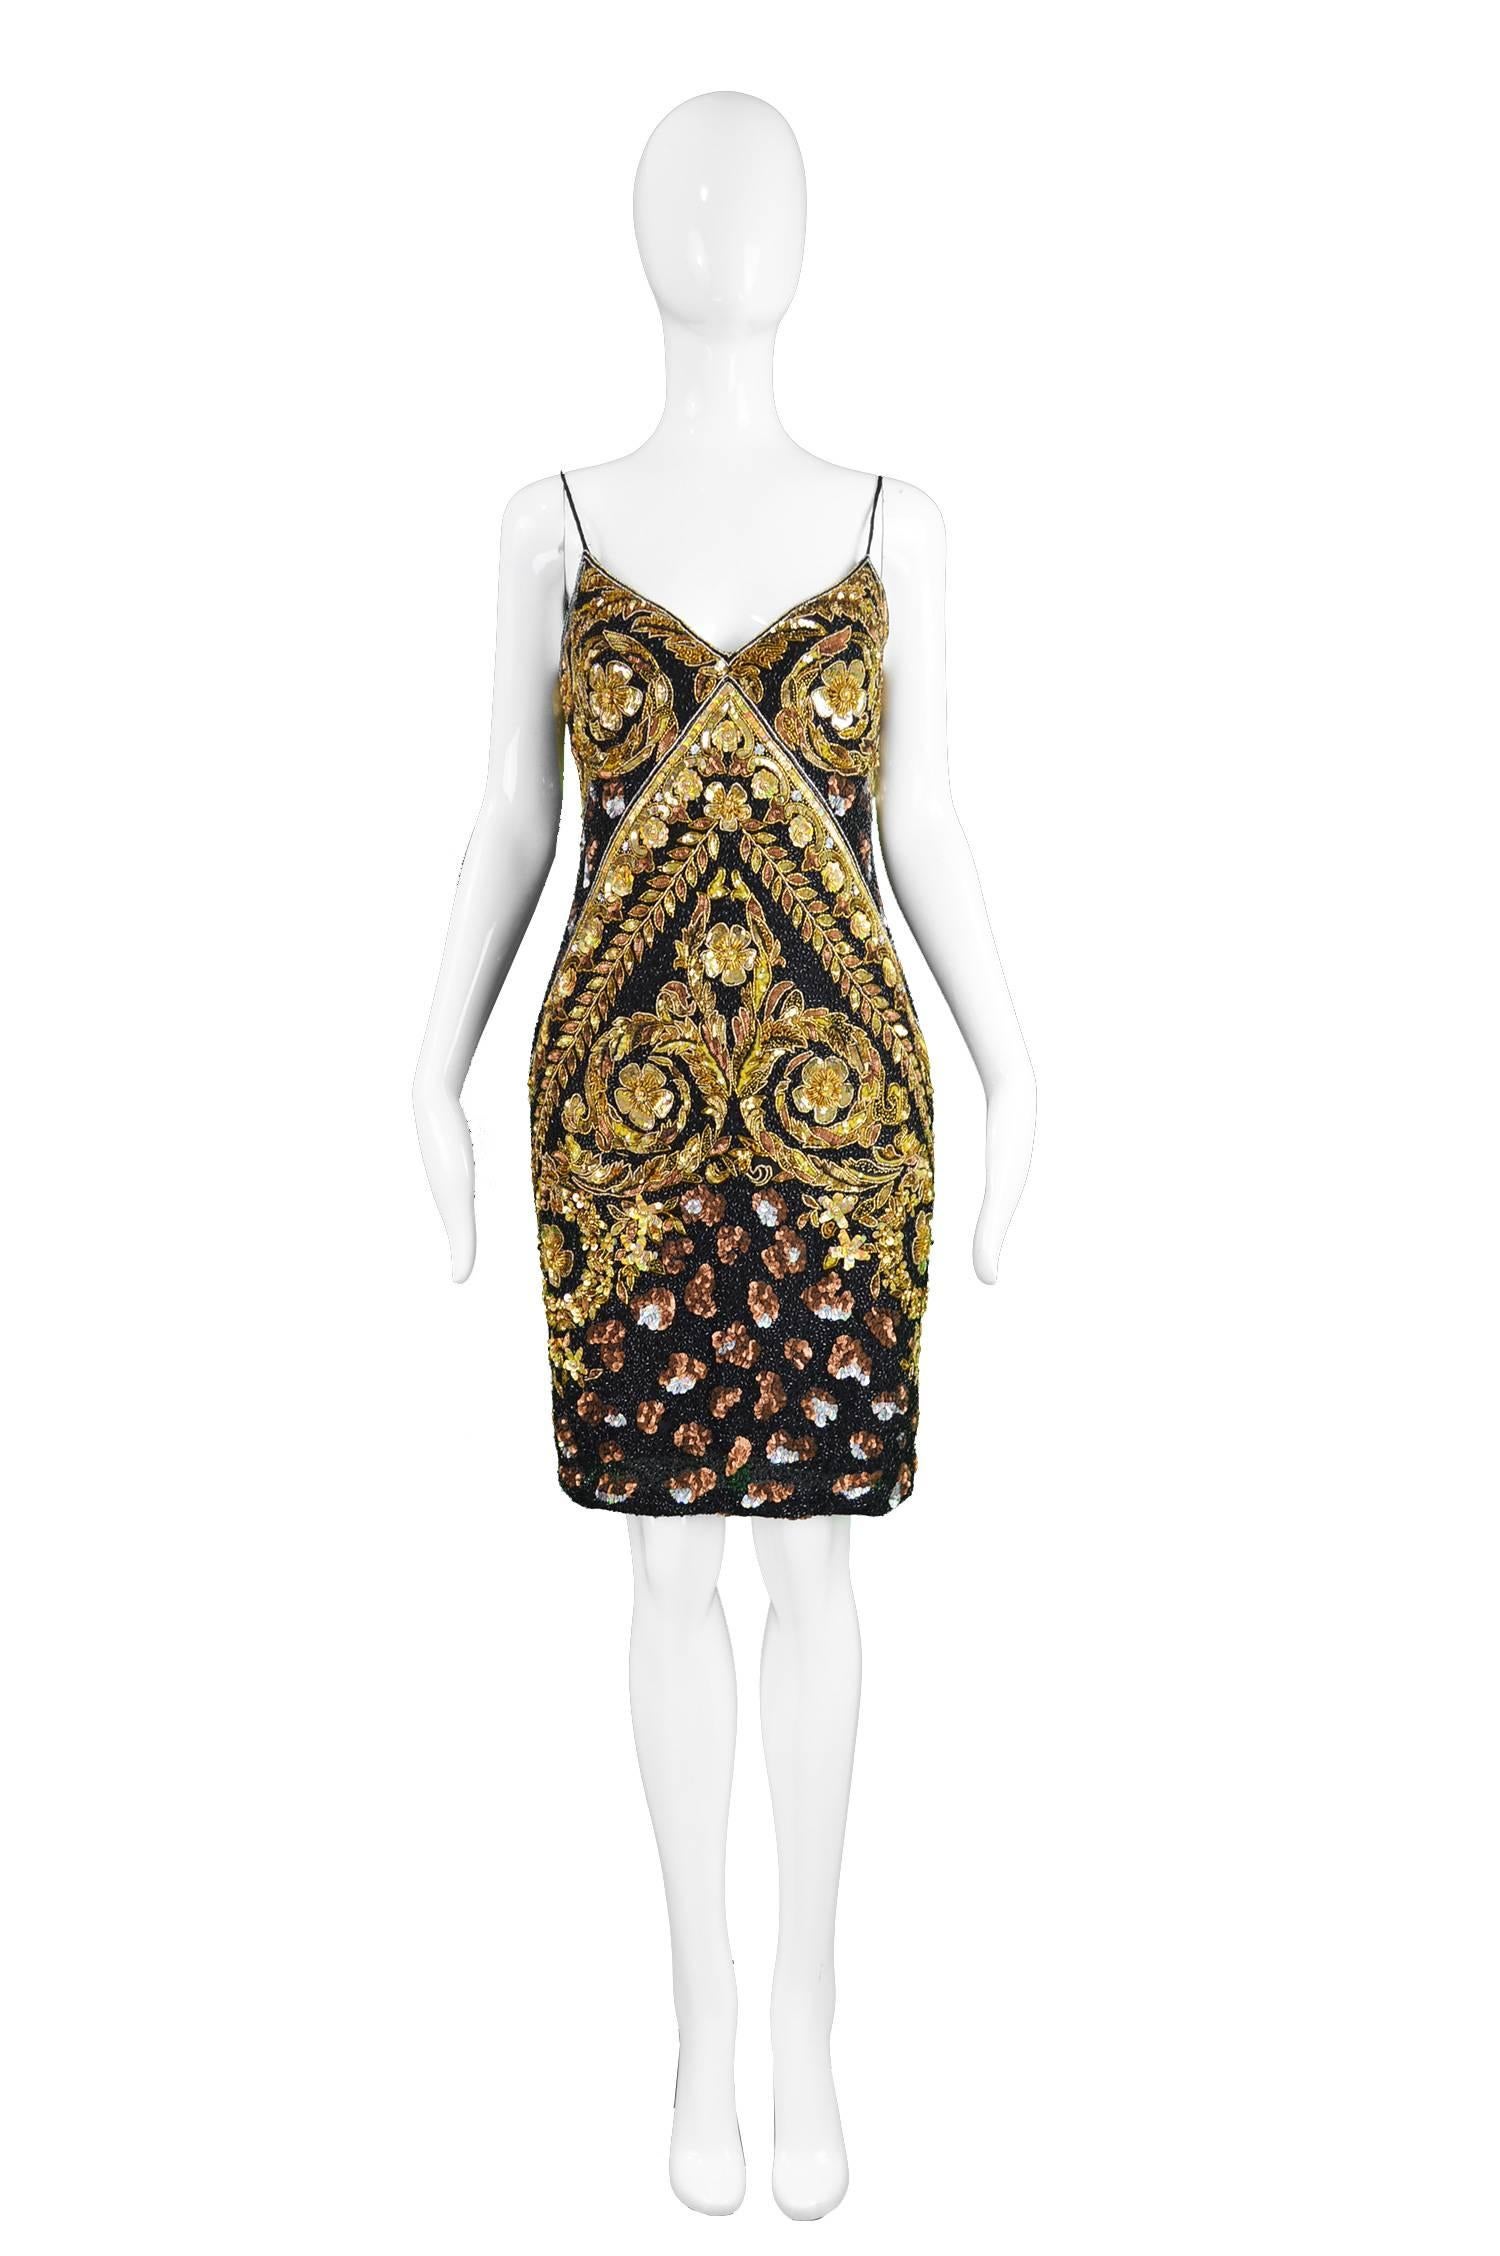 Naeem Khan Vintage Heavily Beaded & Sequinned Silk Party Dress, 1980s

Size: Marked S fits like UK 10/ US 6/ EU 38. Please check measurements.
Bust - 34” / 86cm
Waist - 28” / 71cm
Hips - 38” / 96cm
Length (Shoulder to Hem) - 36” /